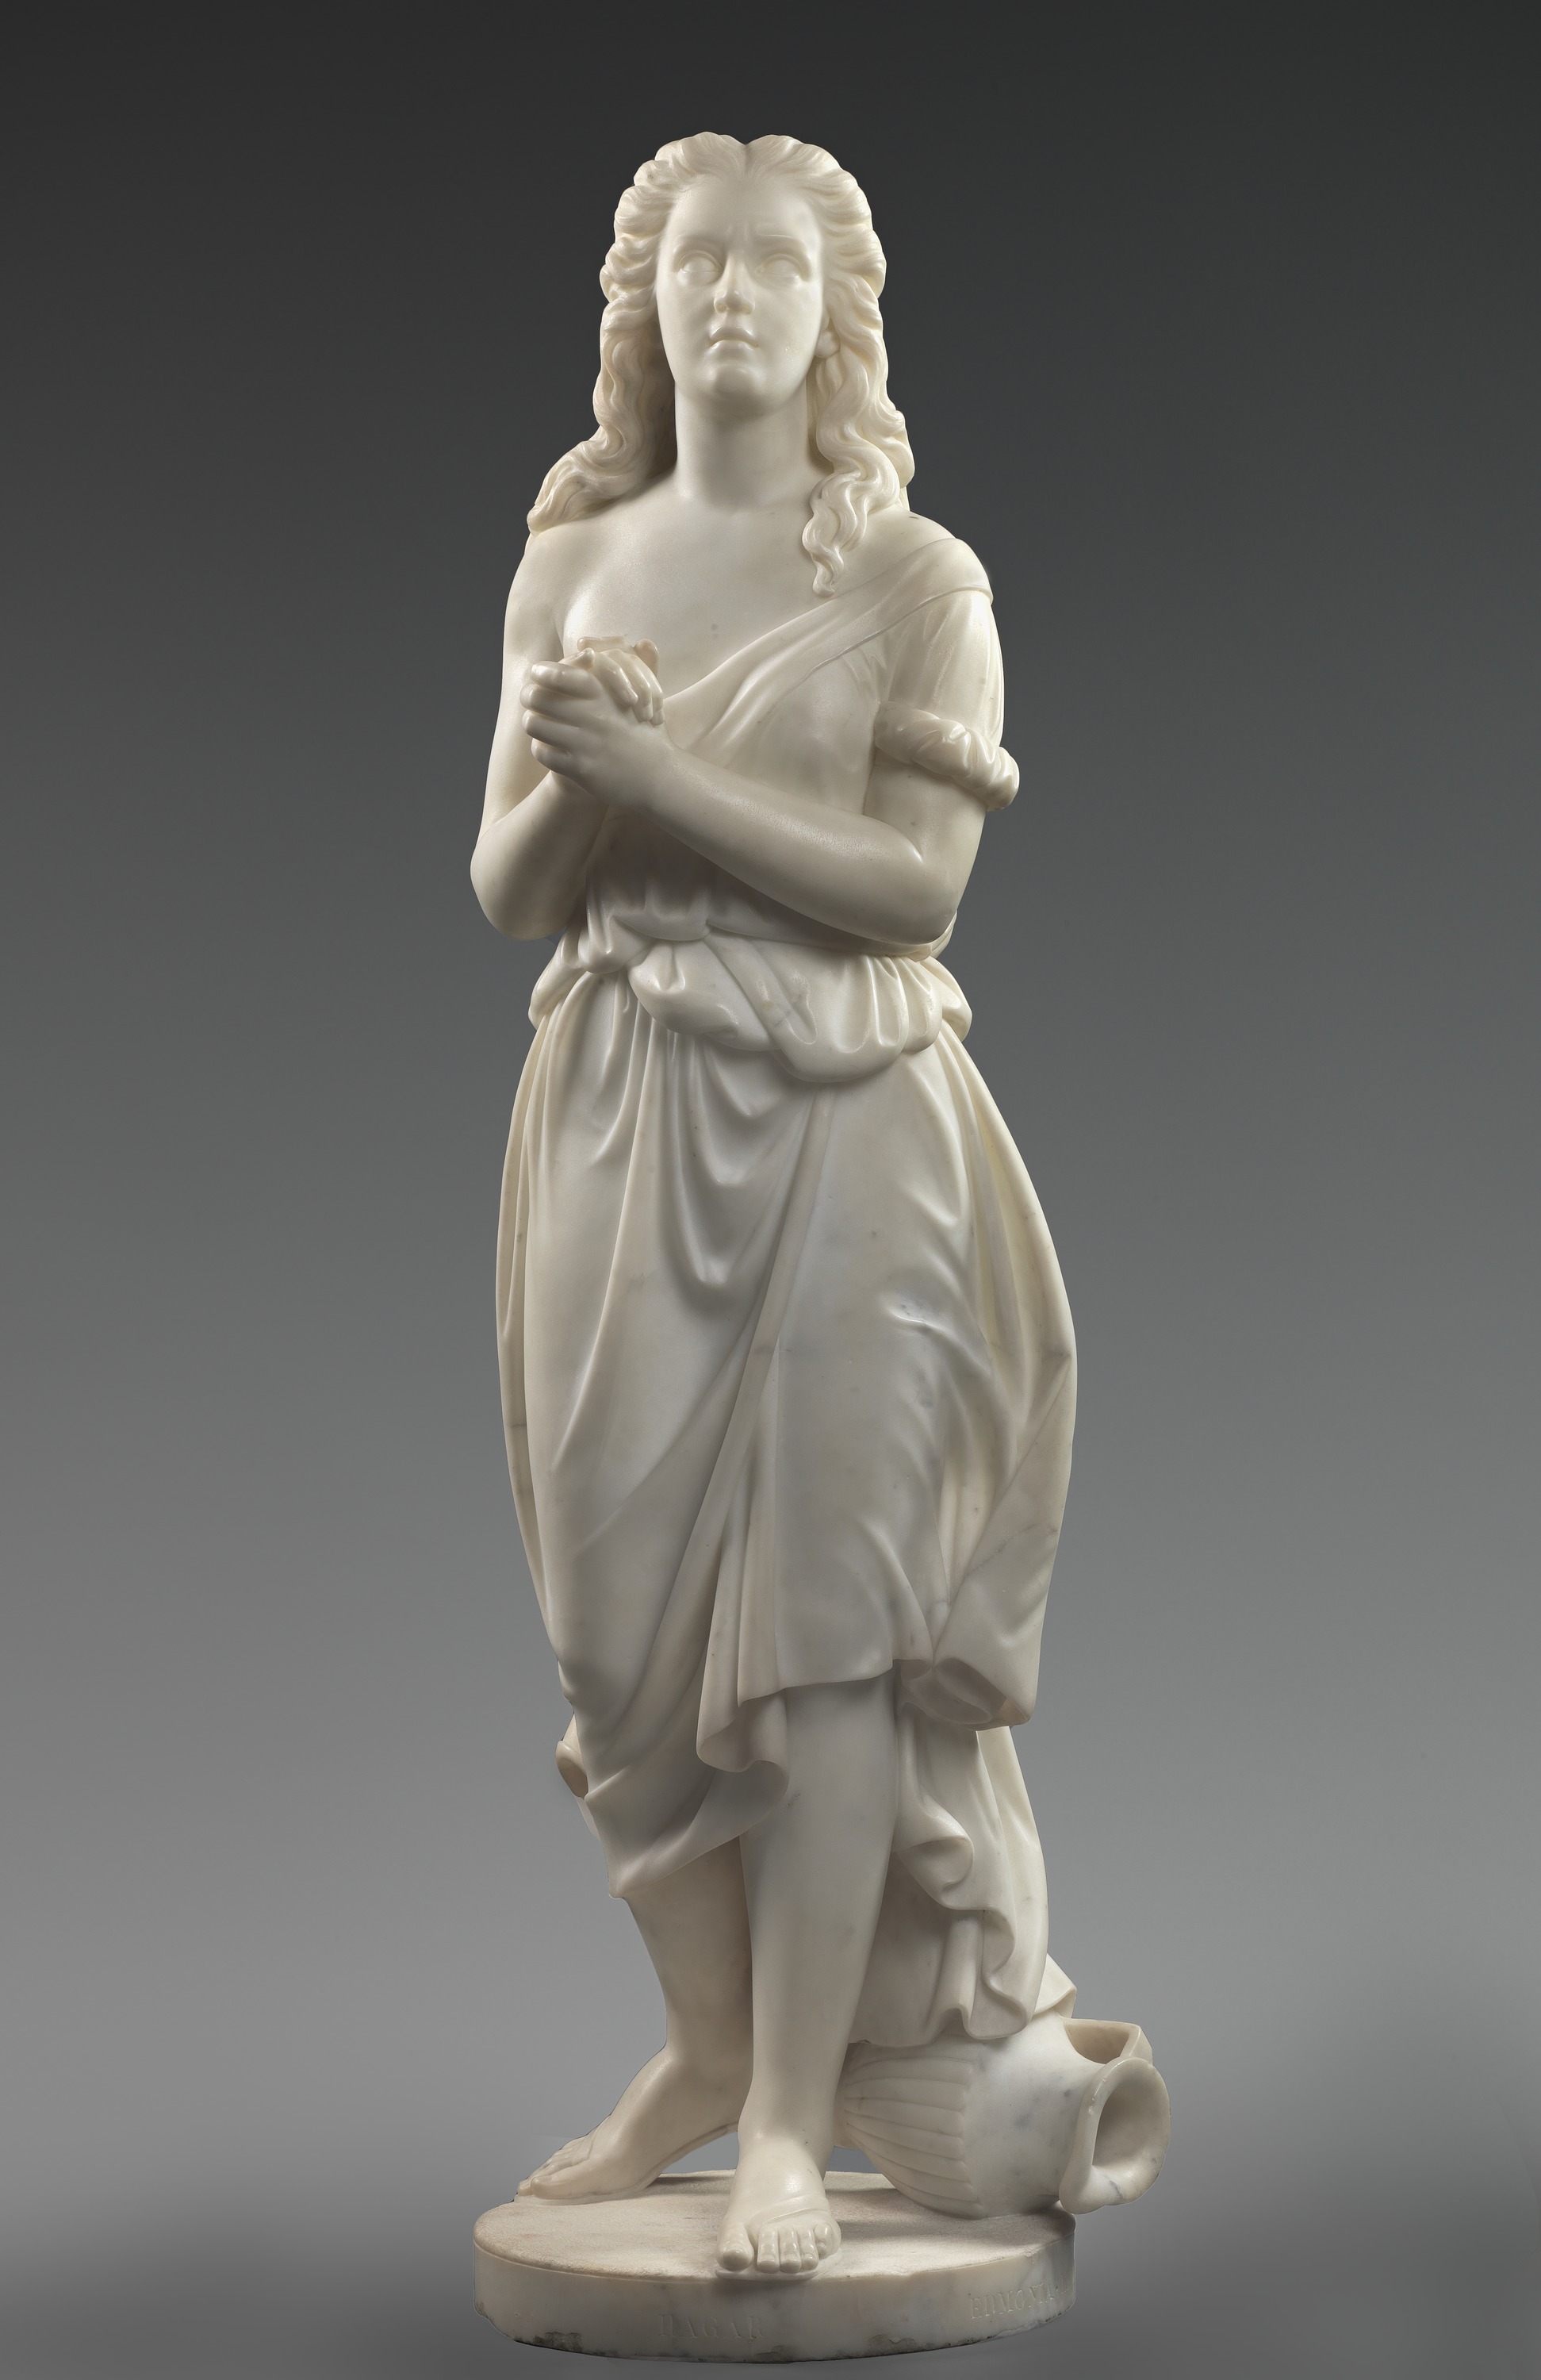 Hagar by Edmonia Lewis - 1875 - 133.6 x 38.8 x 43.4 cm. Smithsonian American Art Museum